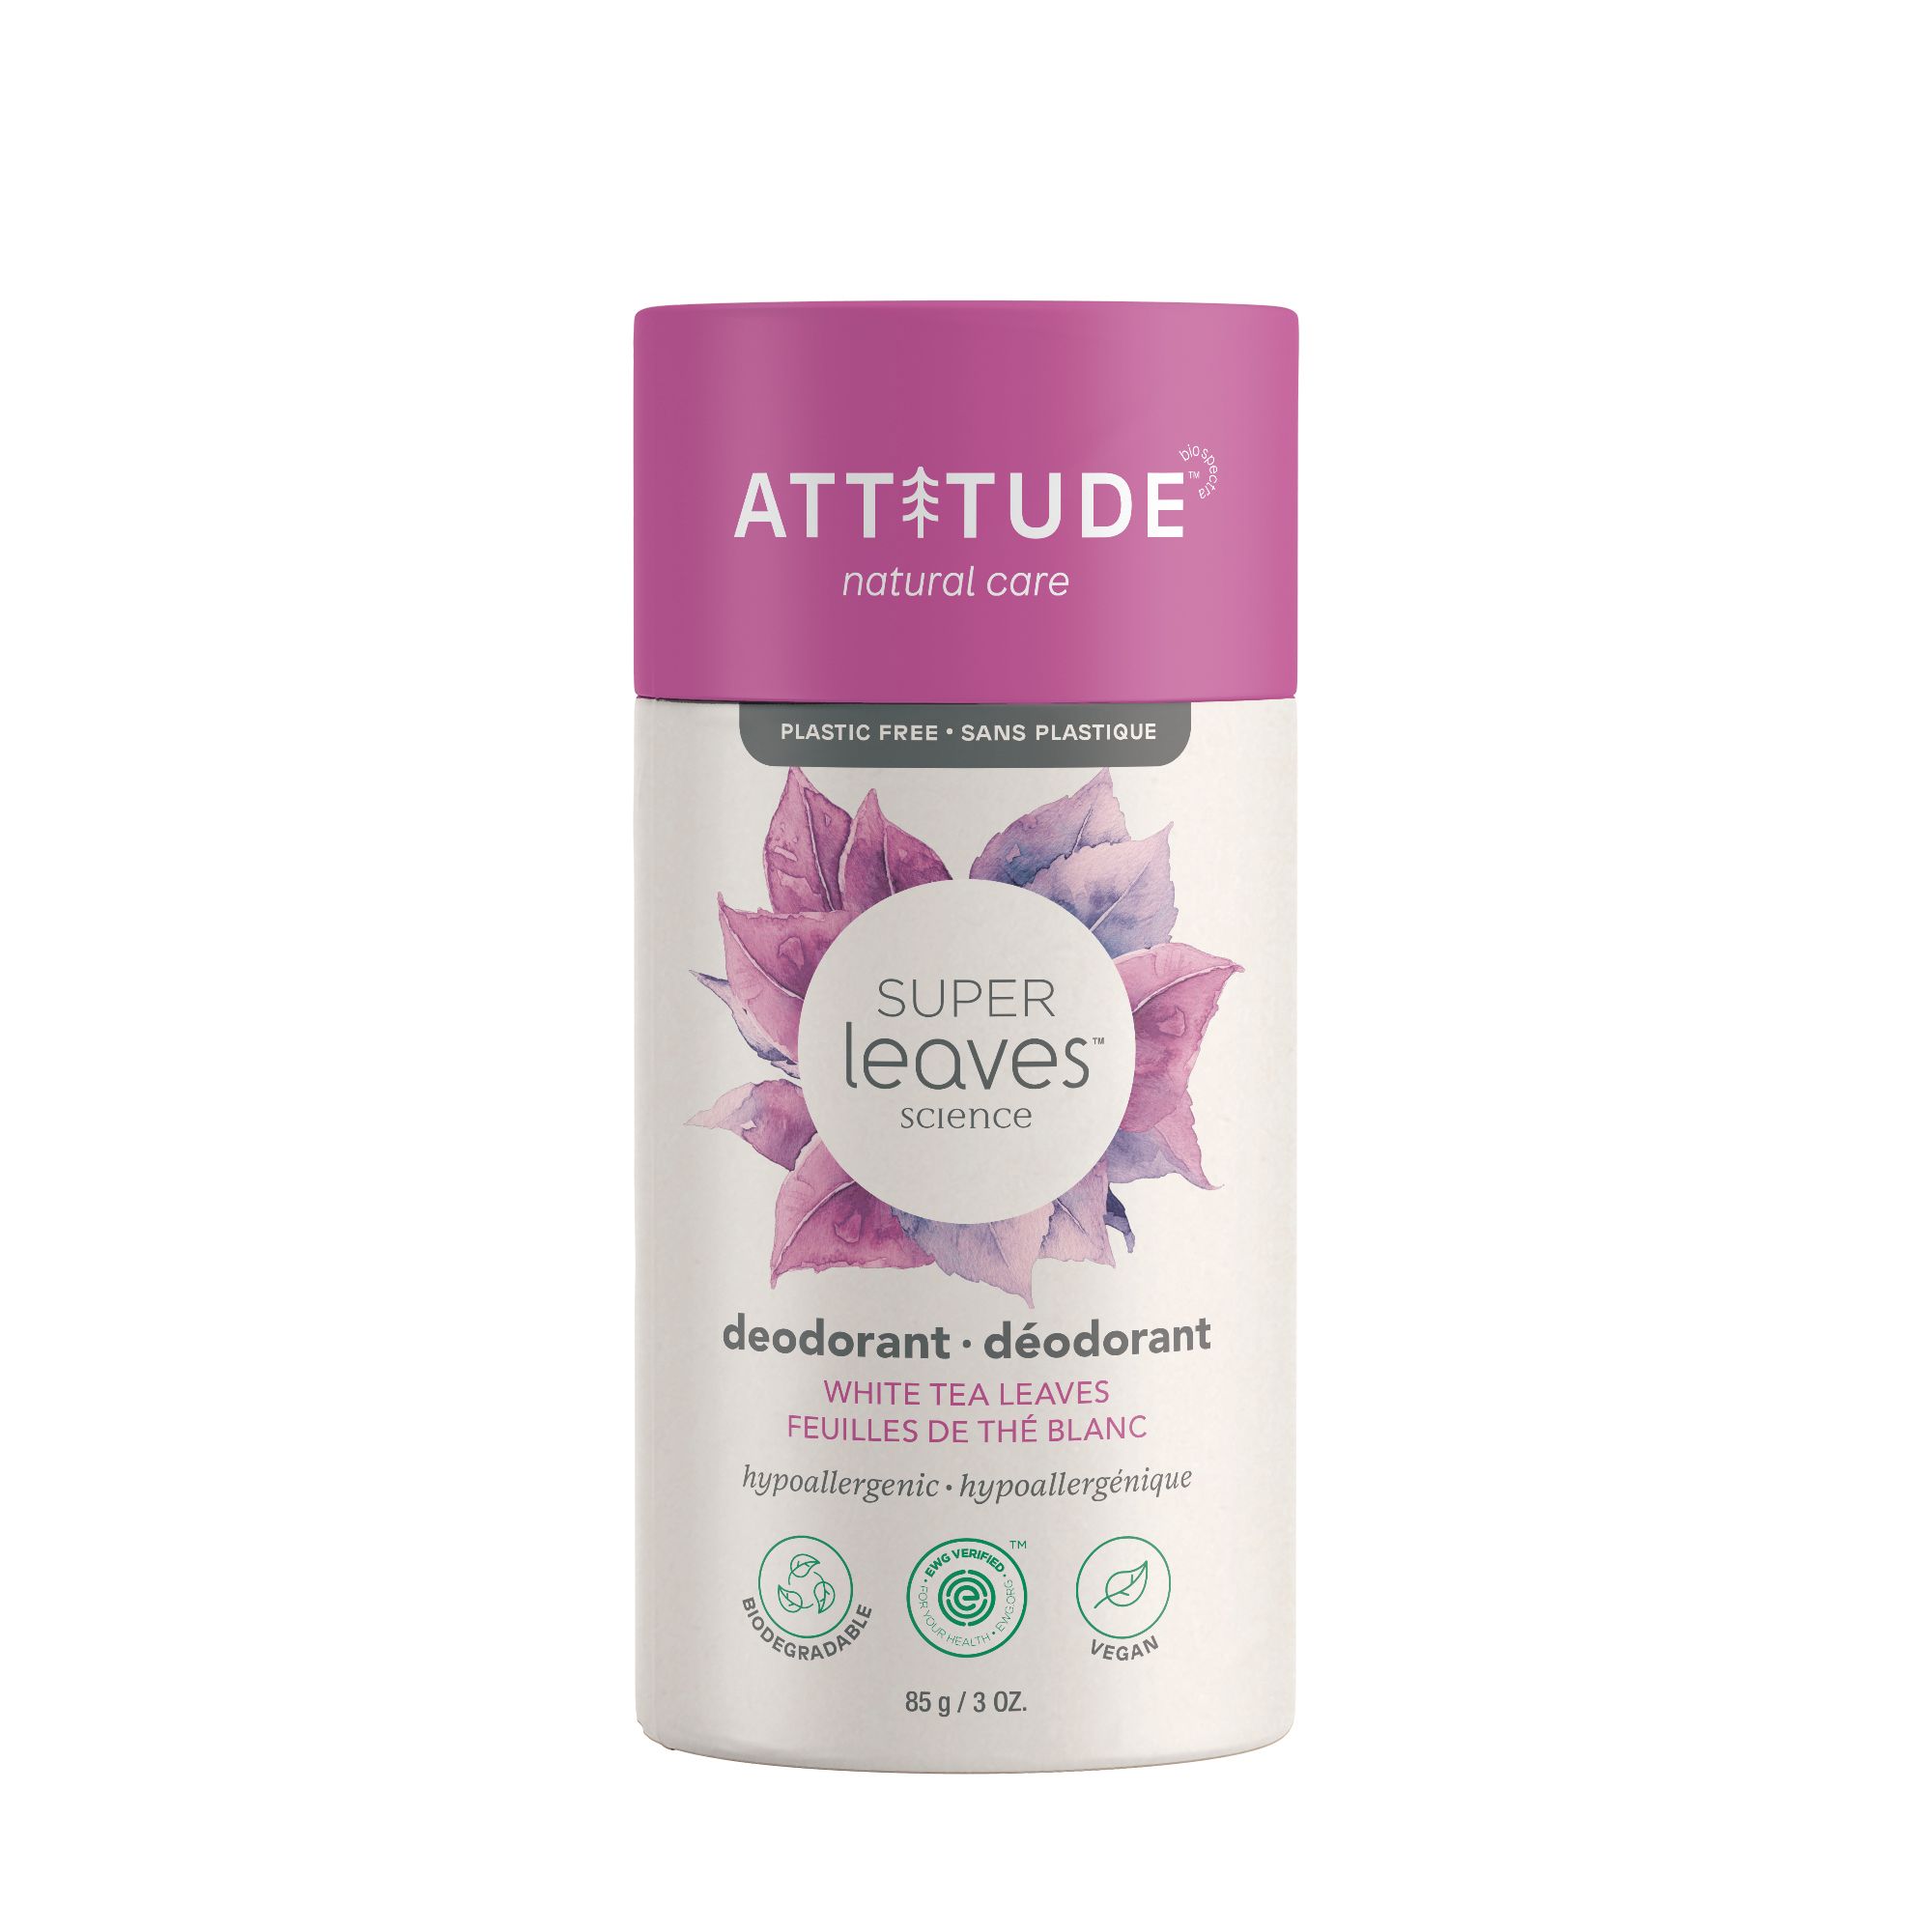 ATTITUDE Super Leaves Plastic Free Deodorant, White Tea Leaves